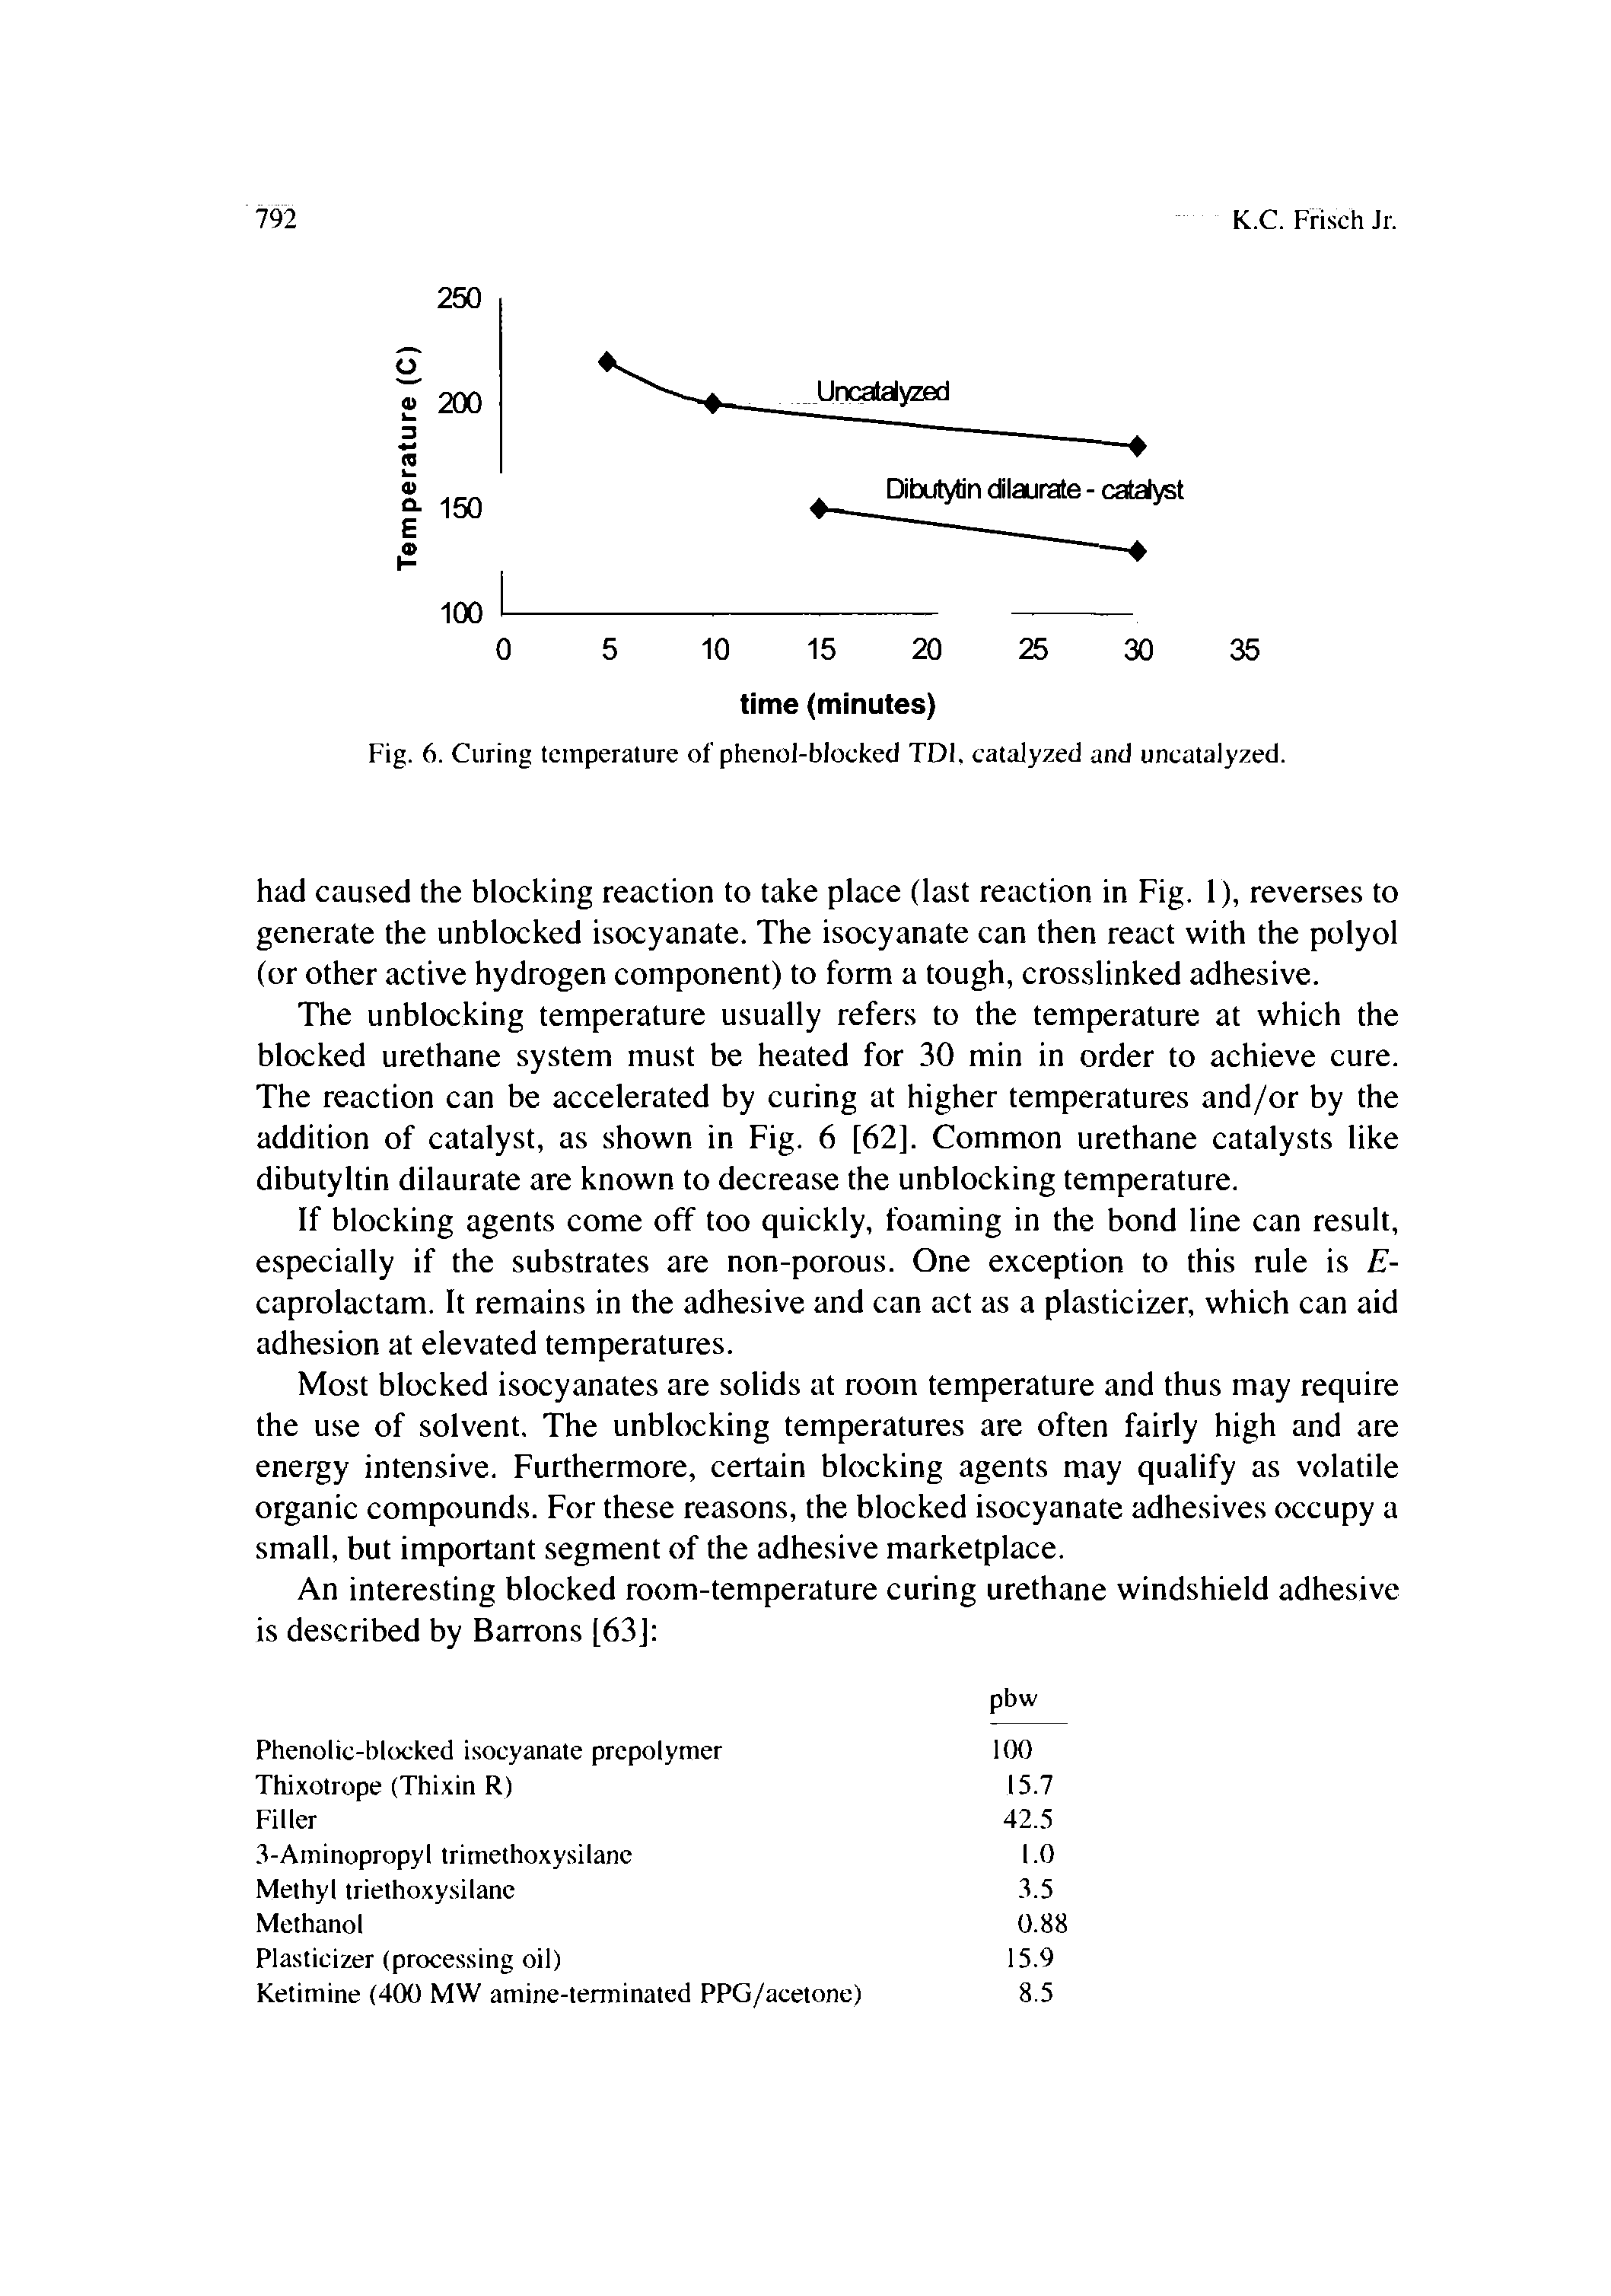 Fig. 6. Curing temperature of phenol-blocked TDI, catalyzed and uncatalyzed.